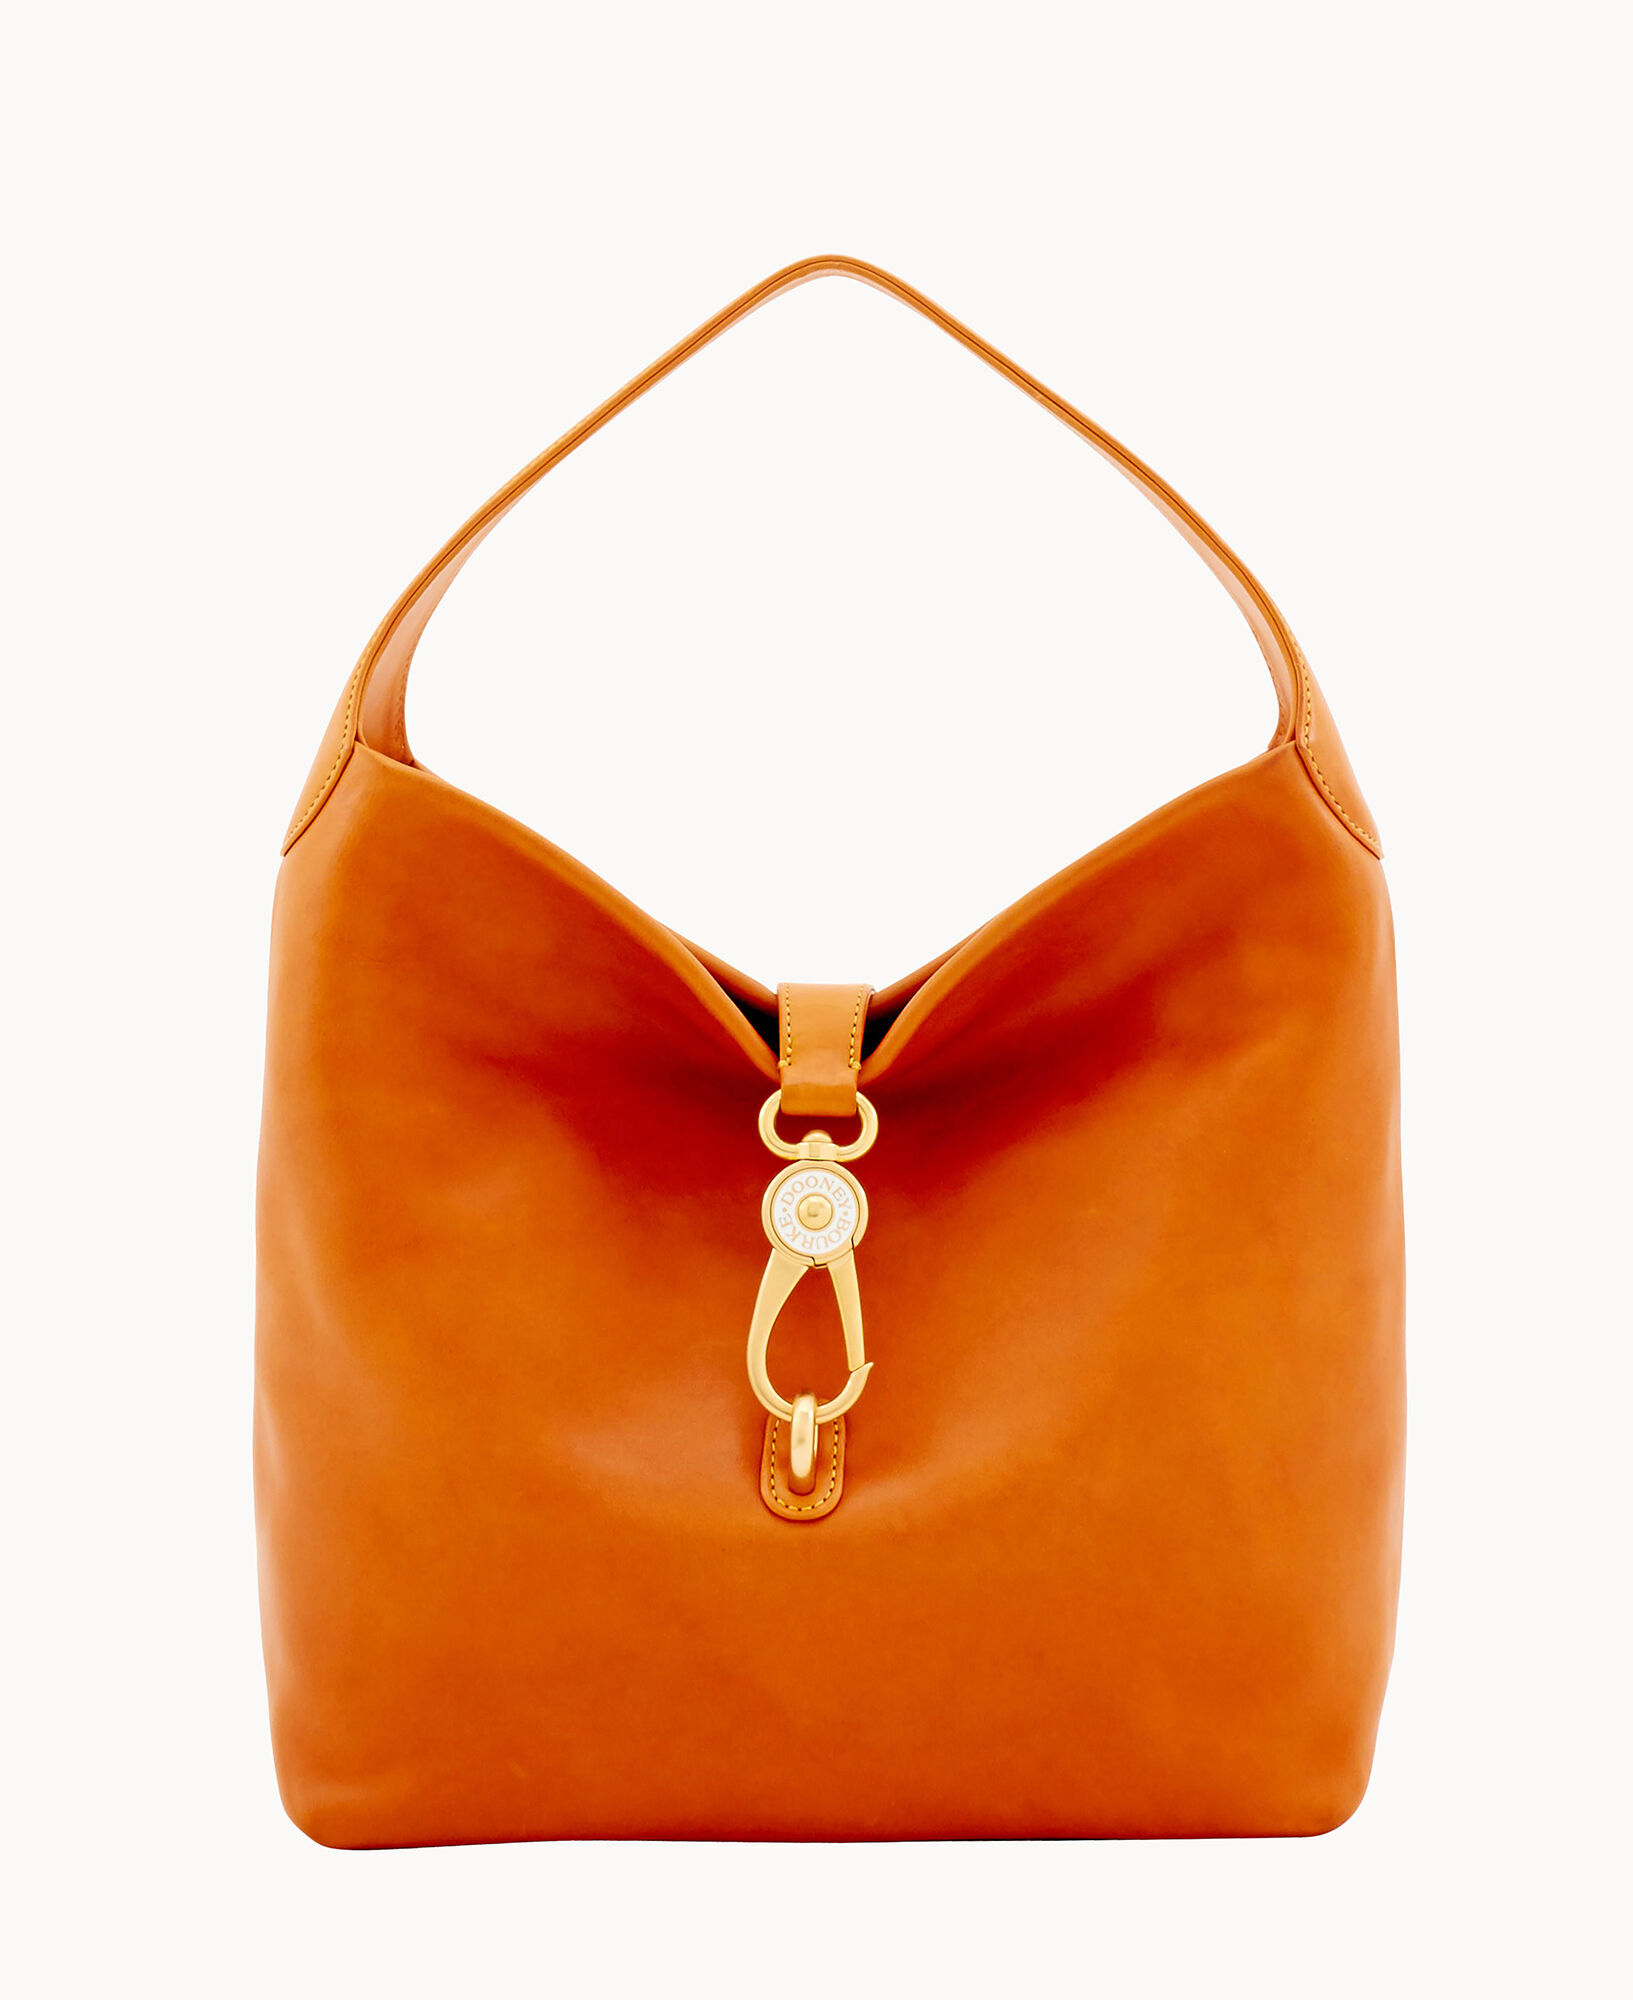 Purchase Wholesale genuine leather handbags. Free Returns & Net 60